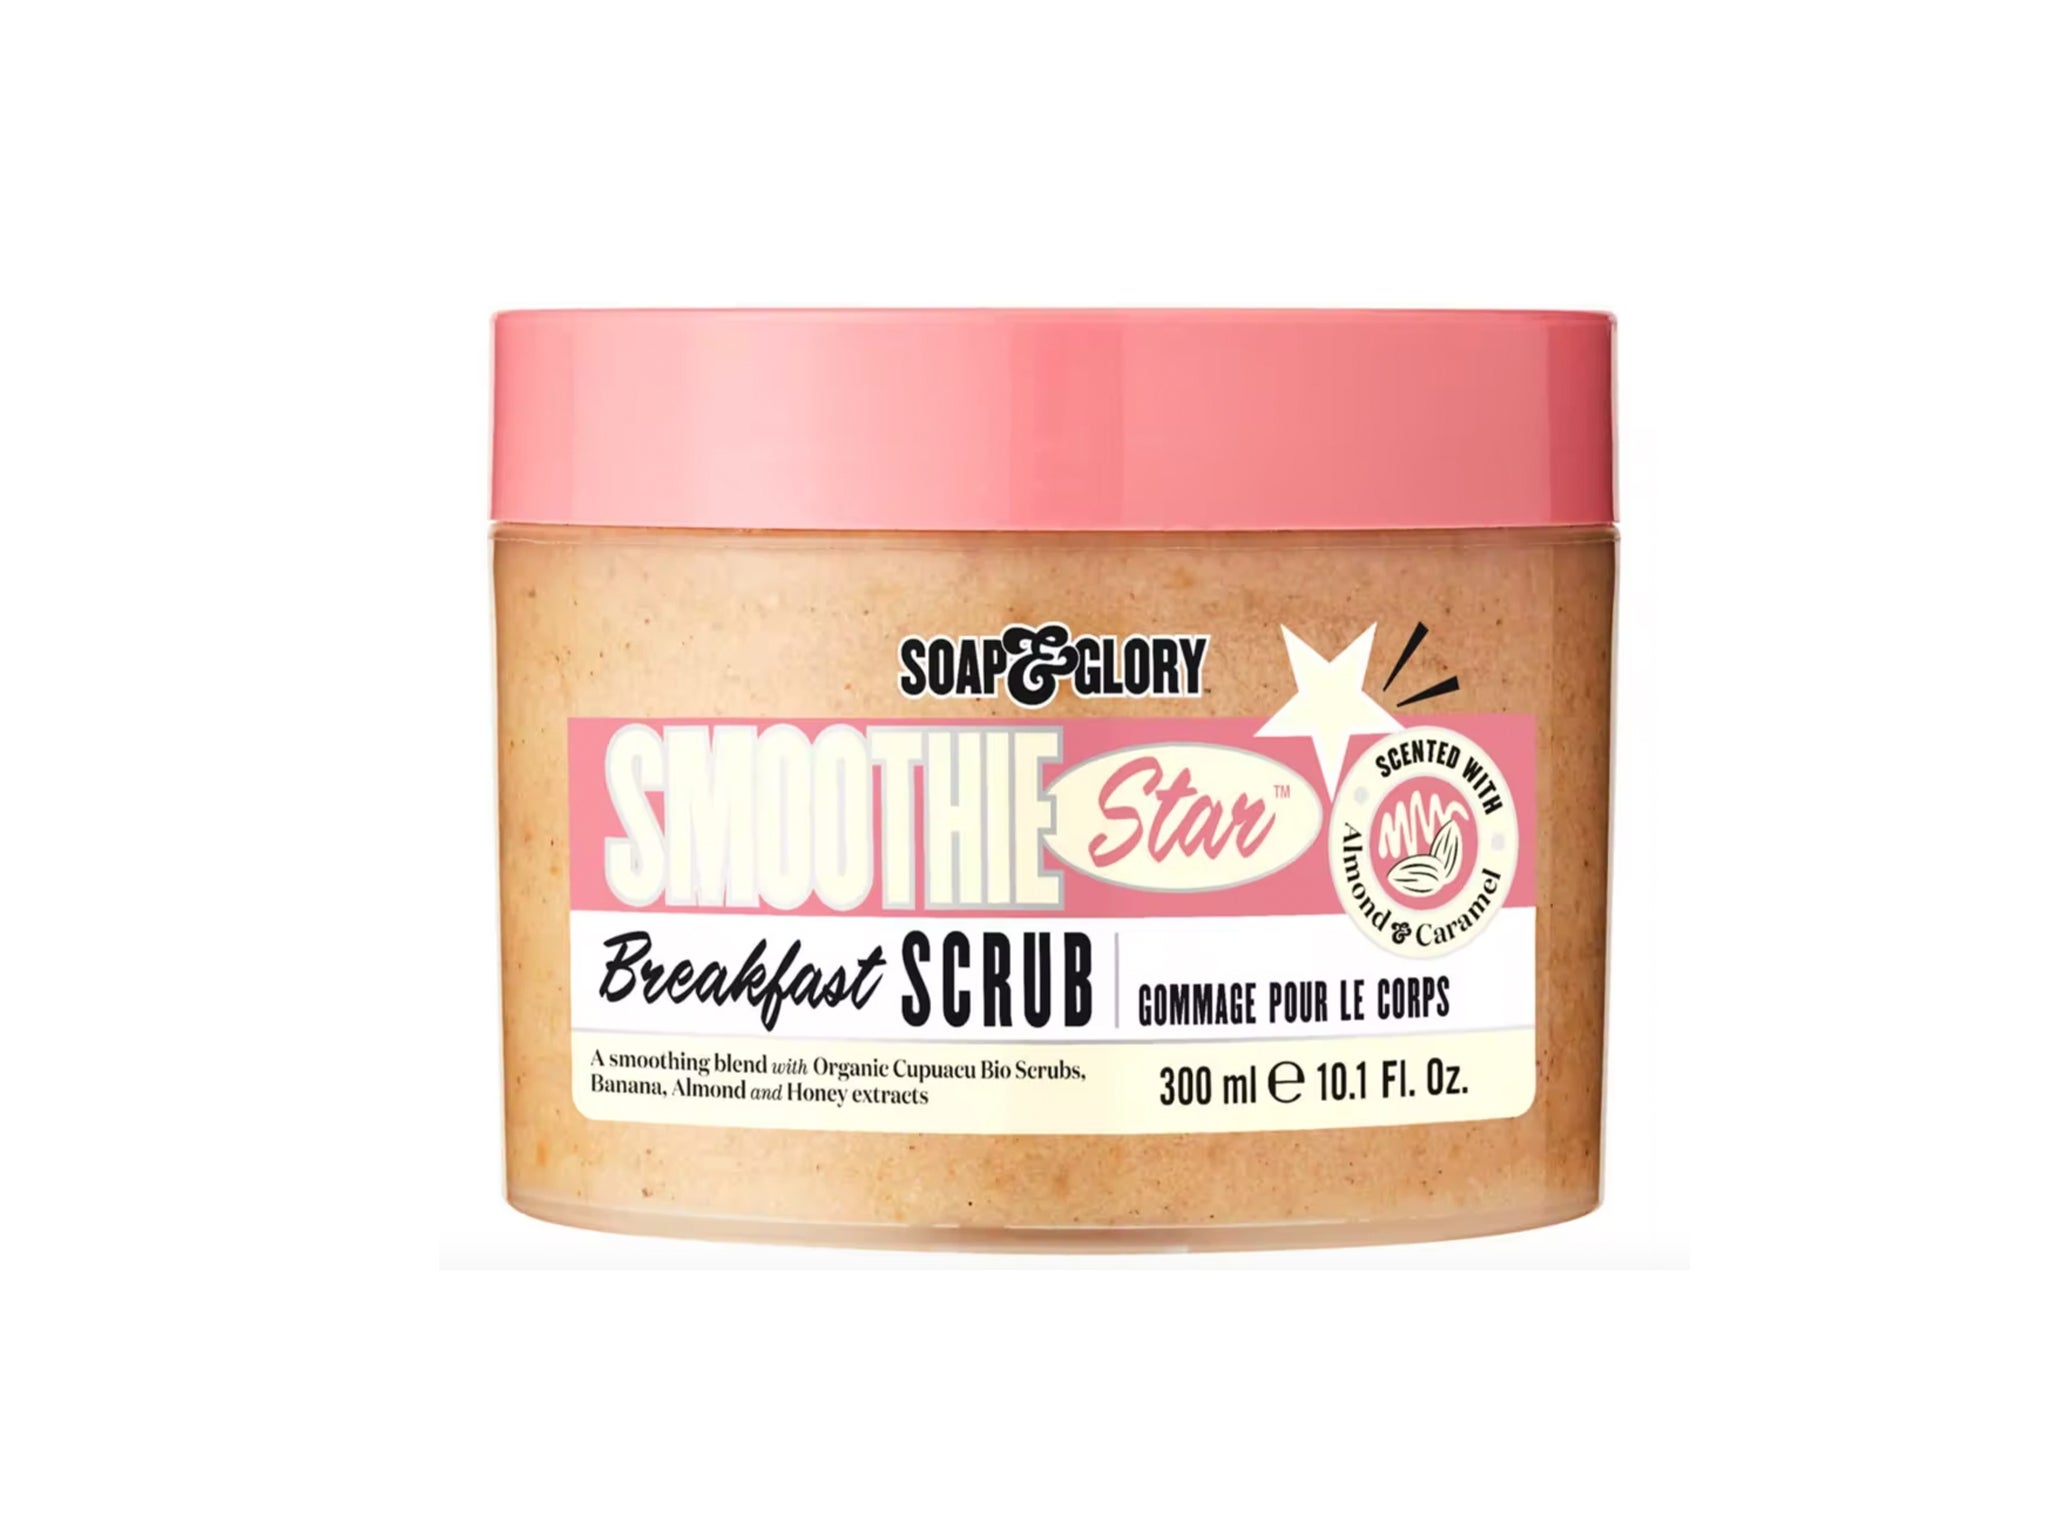 Soap & Glory smoothie star body scrub